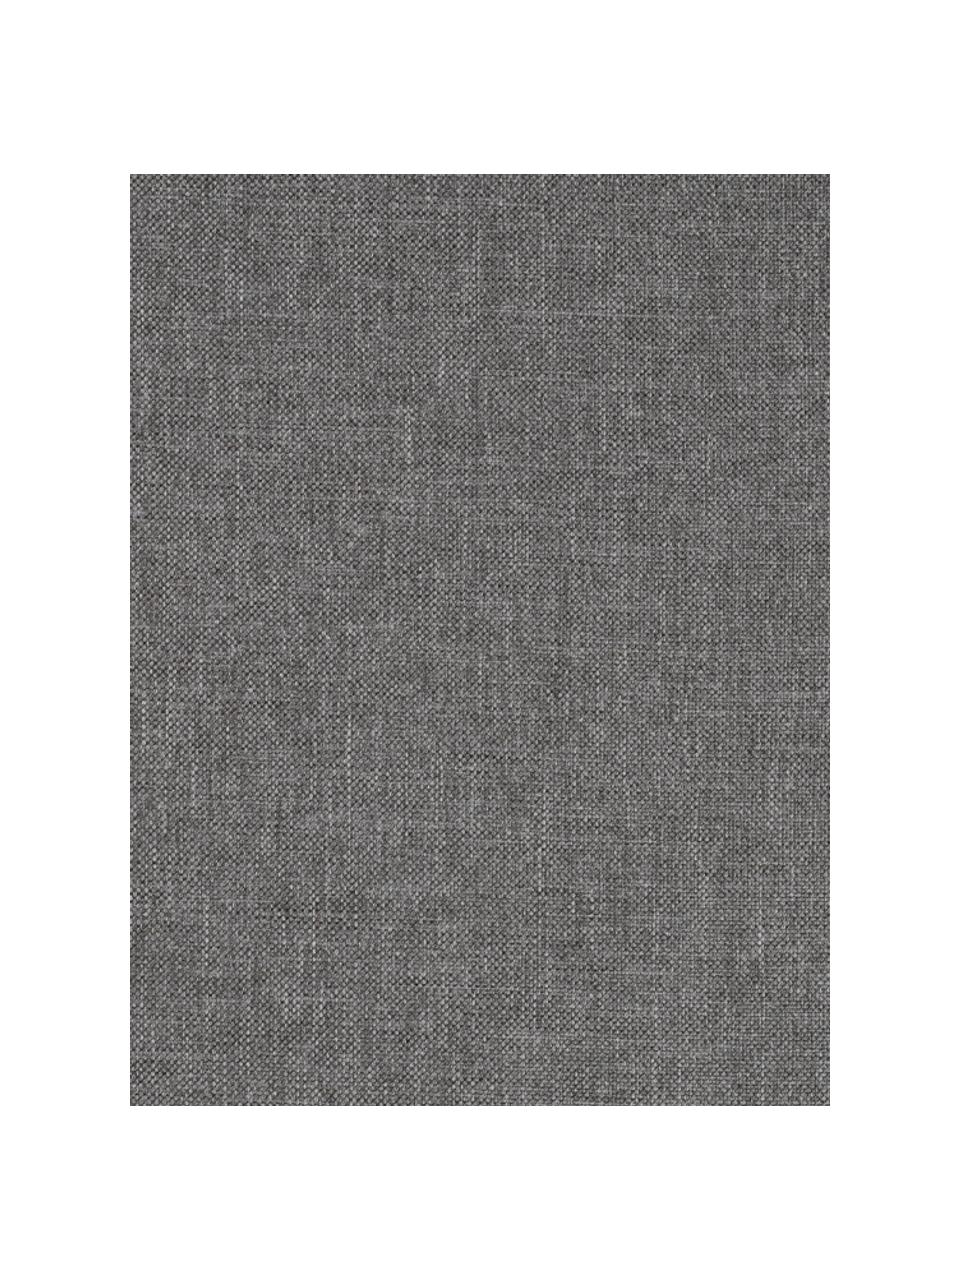 Moderne loungefauteuil Cazar in lichtgrijs, Bekleding: polyester, Frame: verchroomd metaal, Lichtgrijs, chroomkleurig, B 69 x D 79 cm